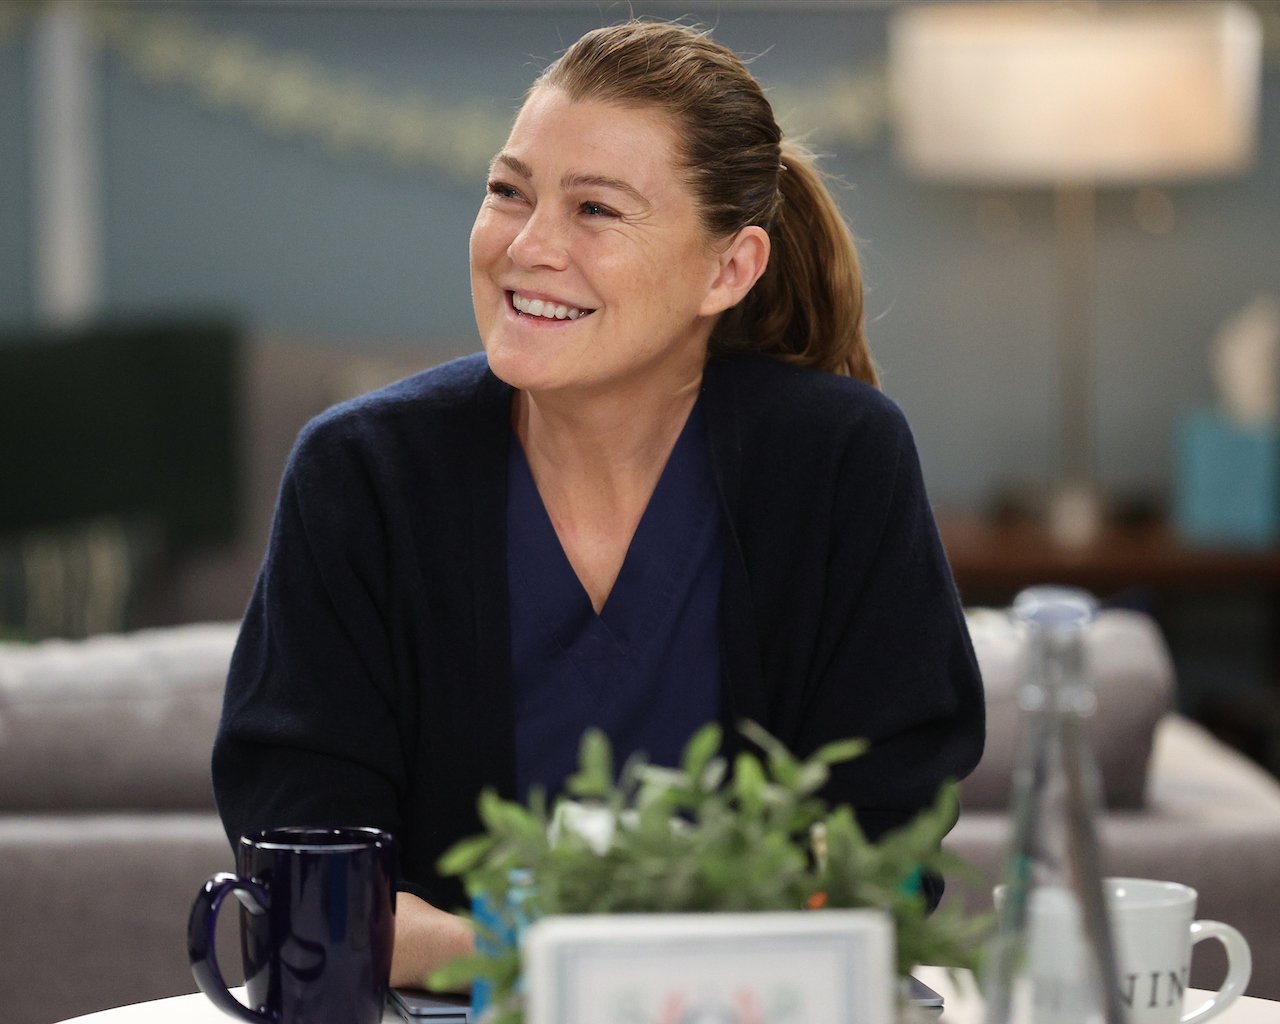 Ellen Pompeo as Meredith Grey smiles wearing blue scrubs on 'Grey's Anatomy'.